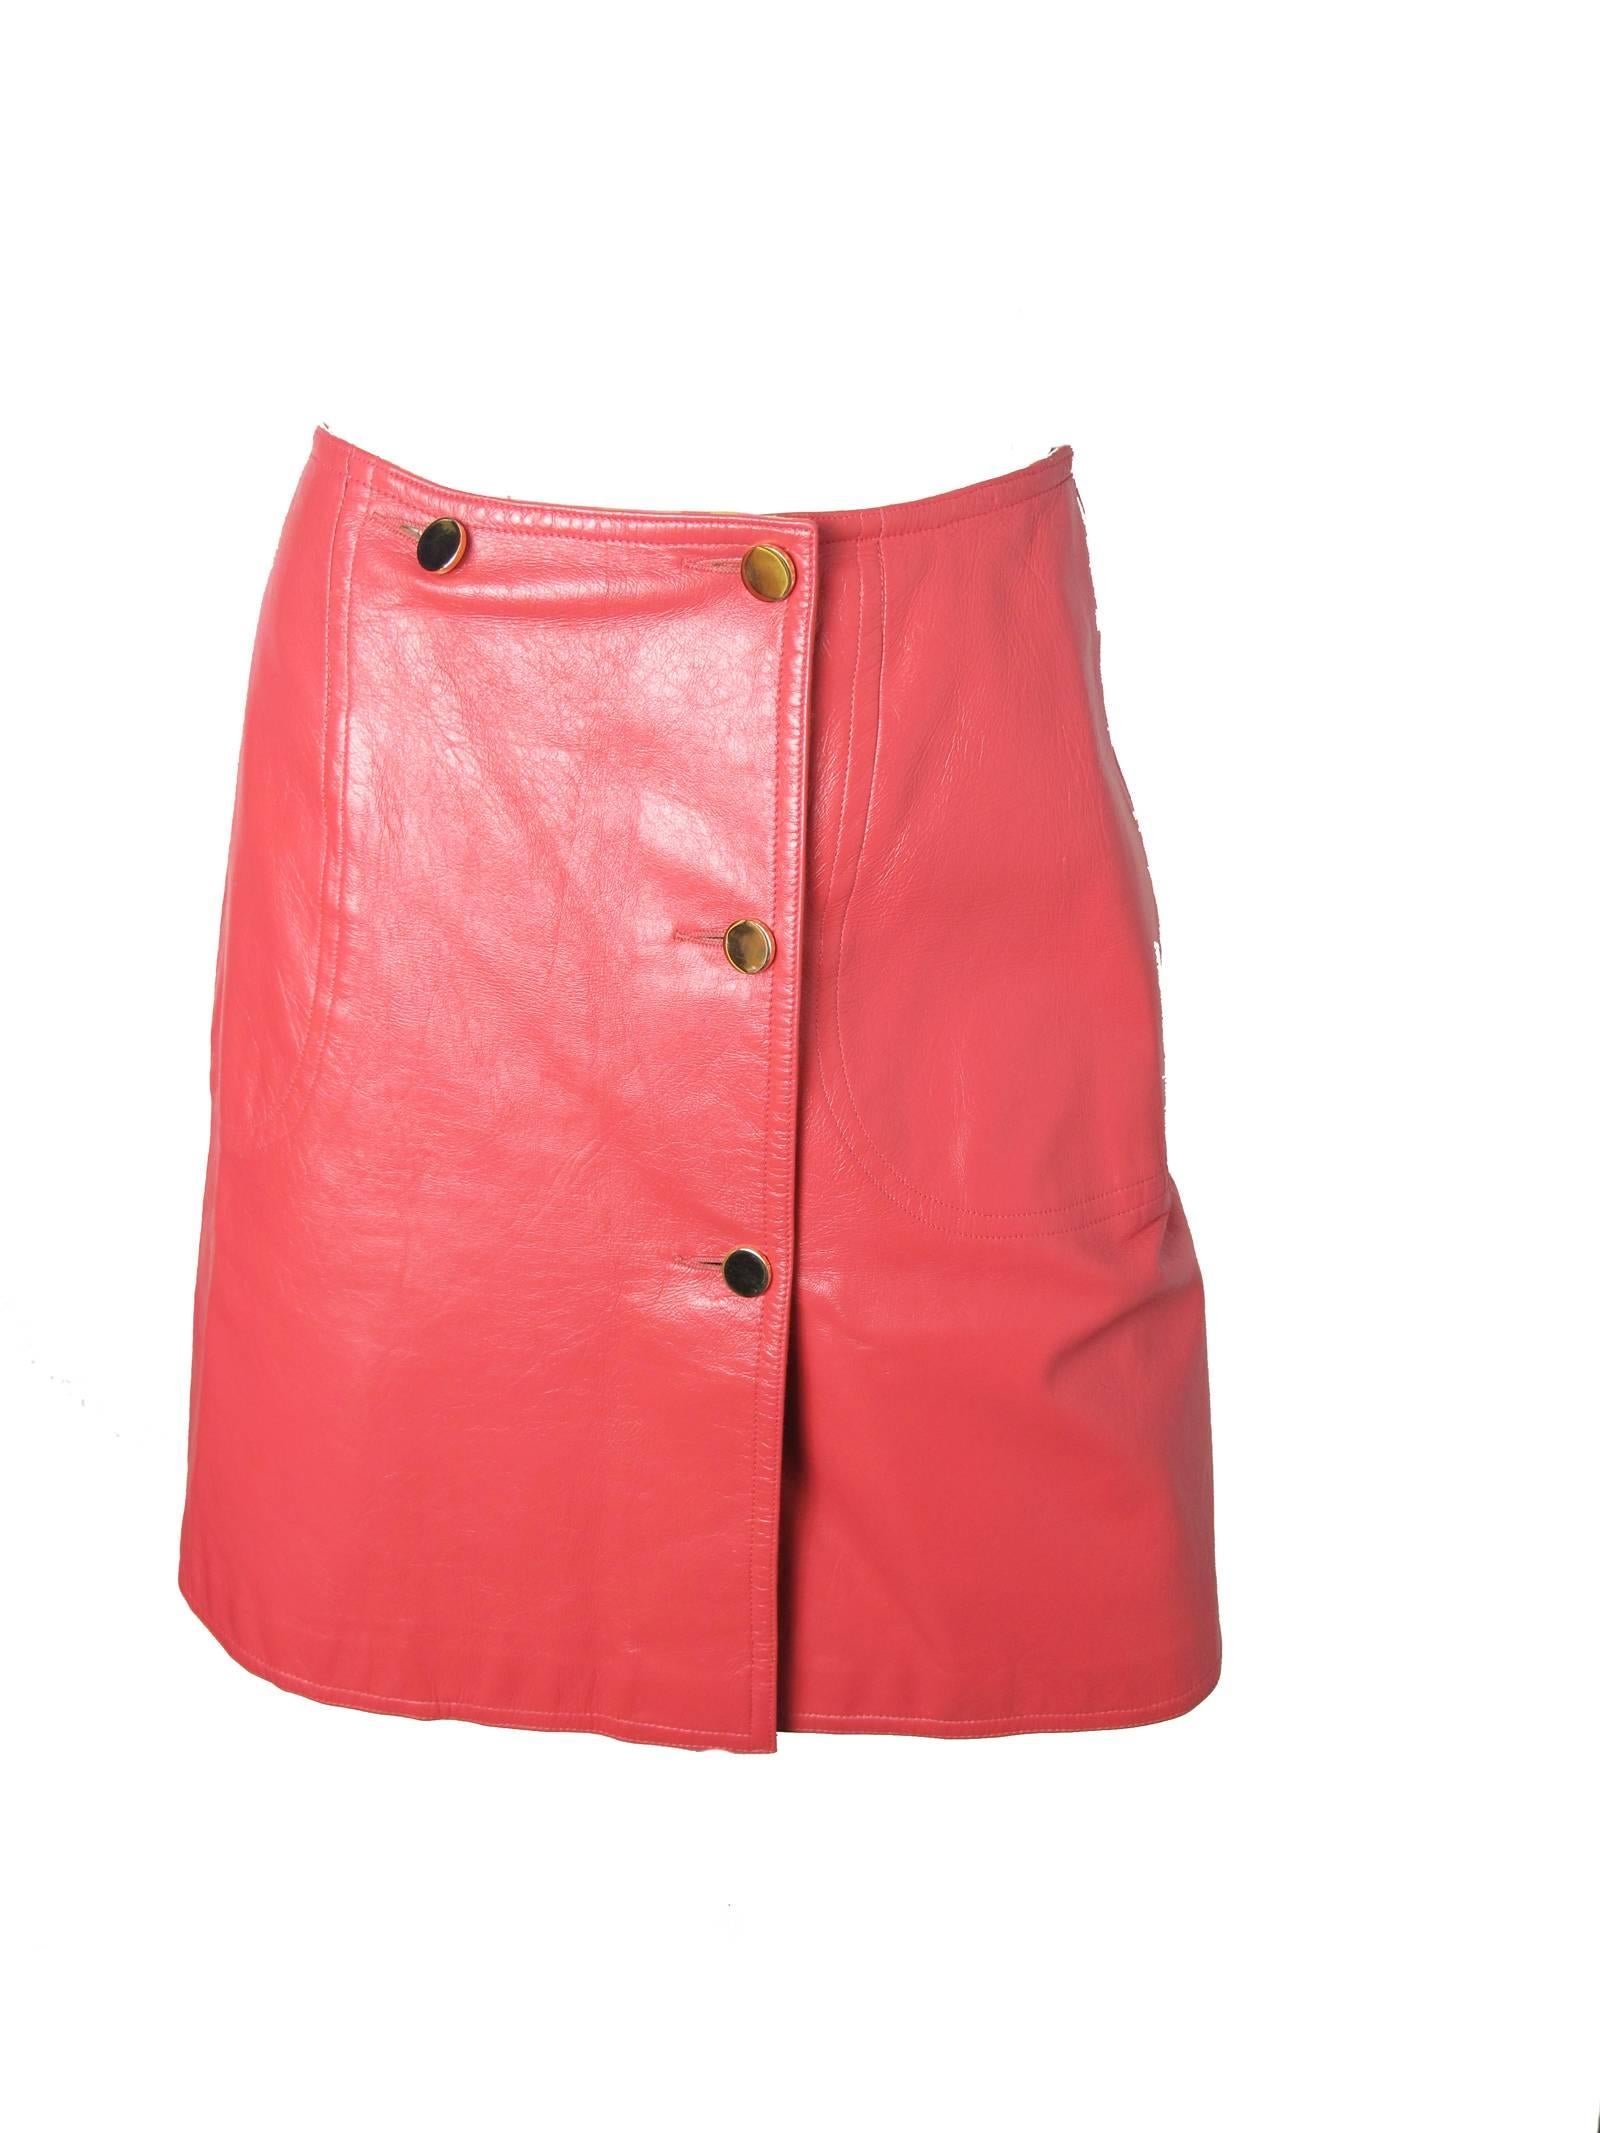 Bonnie Cashin Pink Leather Wrap Skirt  1